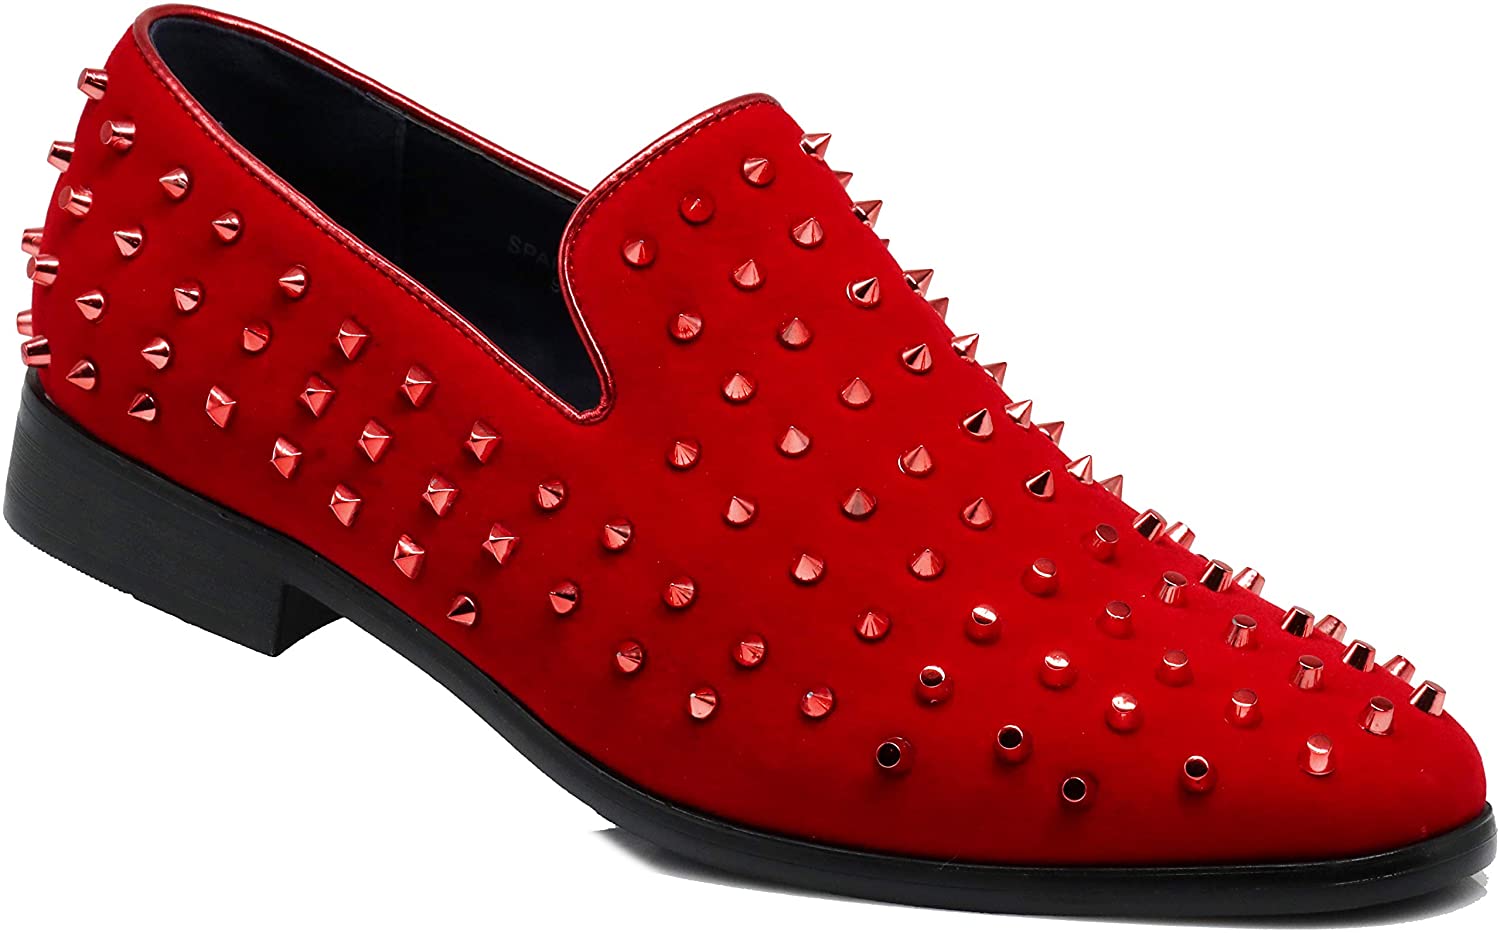 Shalako, Shoes, Mens Vintage 7s Shalako Red Lizard Skin Slipon Dress  Loafers Shoes Italy